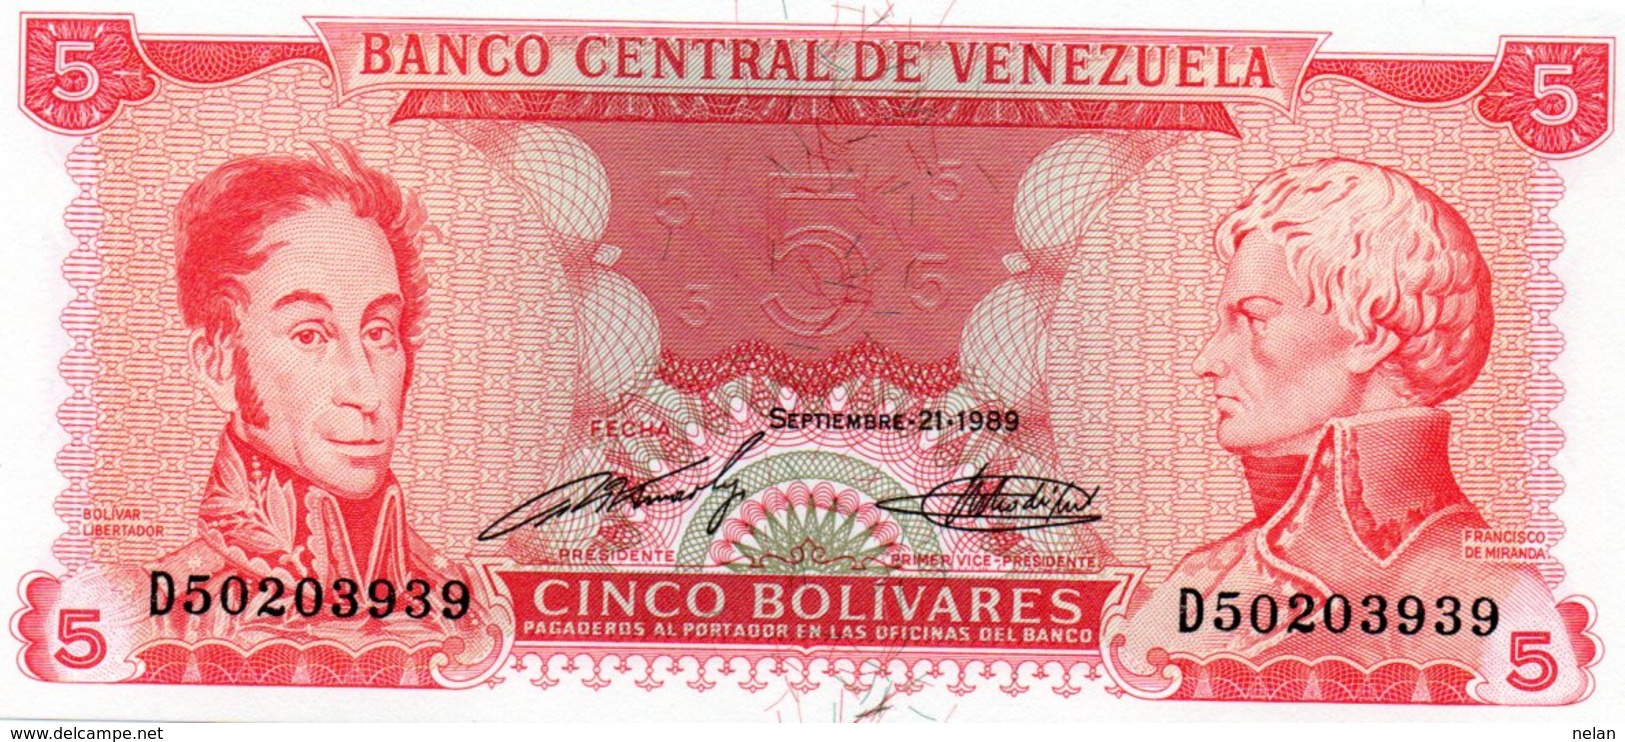 VENEZUELA 5 BOLIVARES 1989  P-70a  UNC - Venezuela